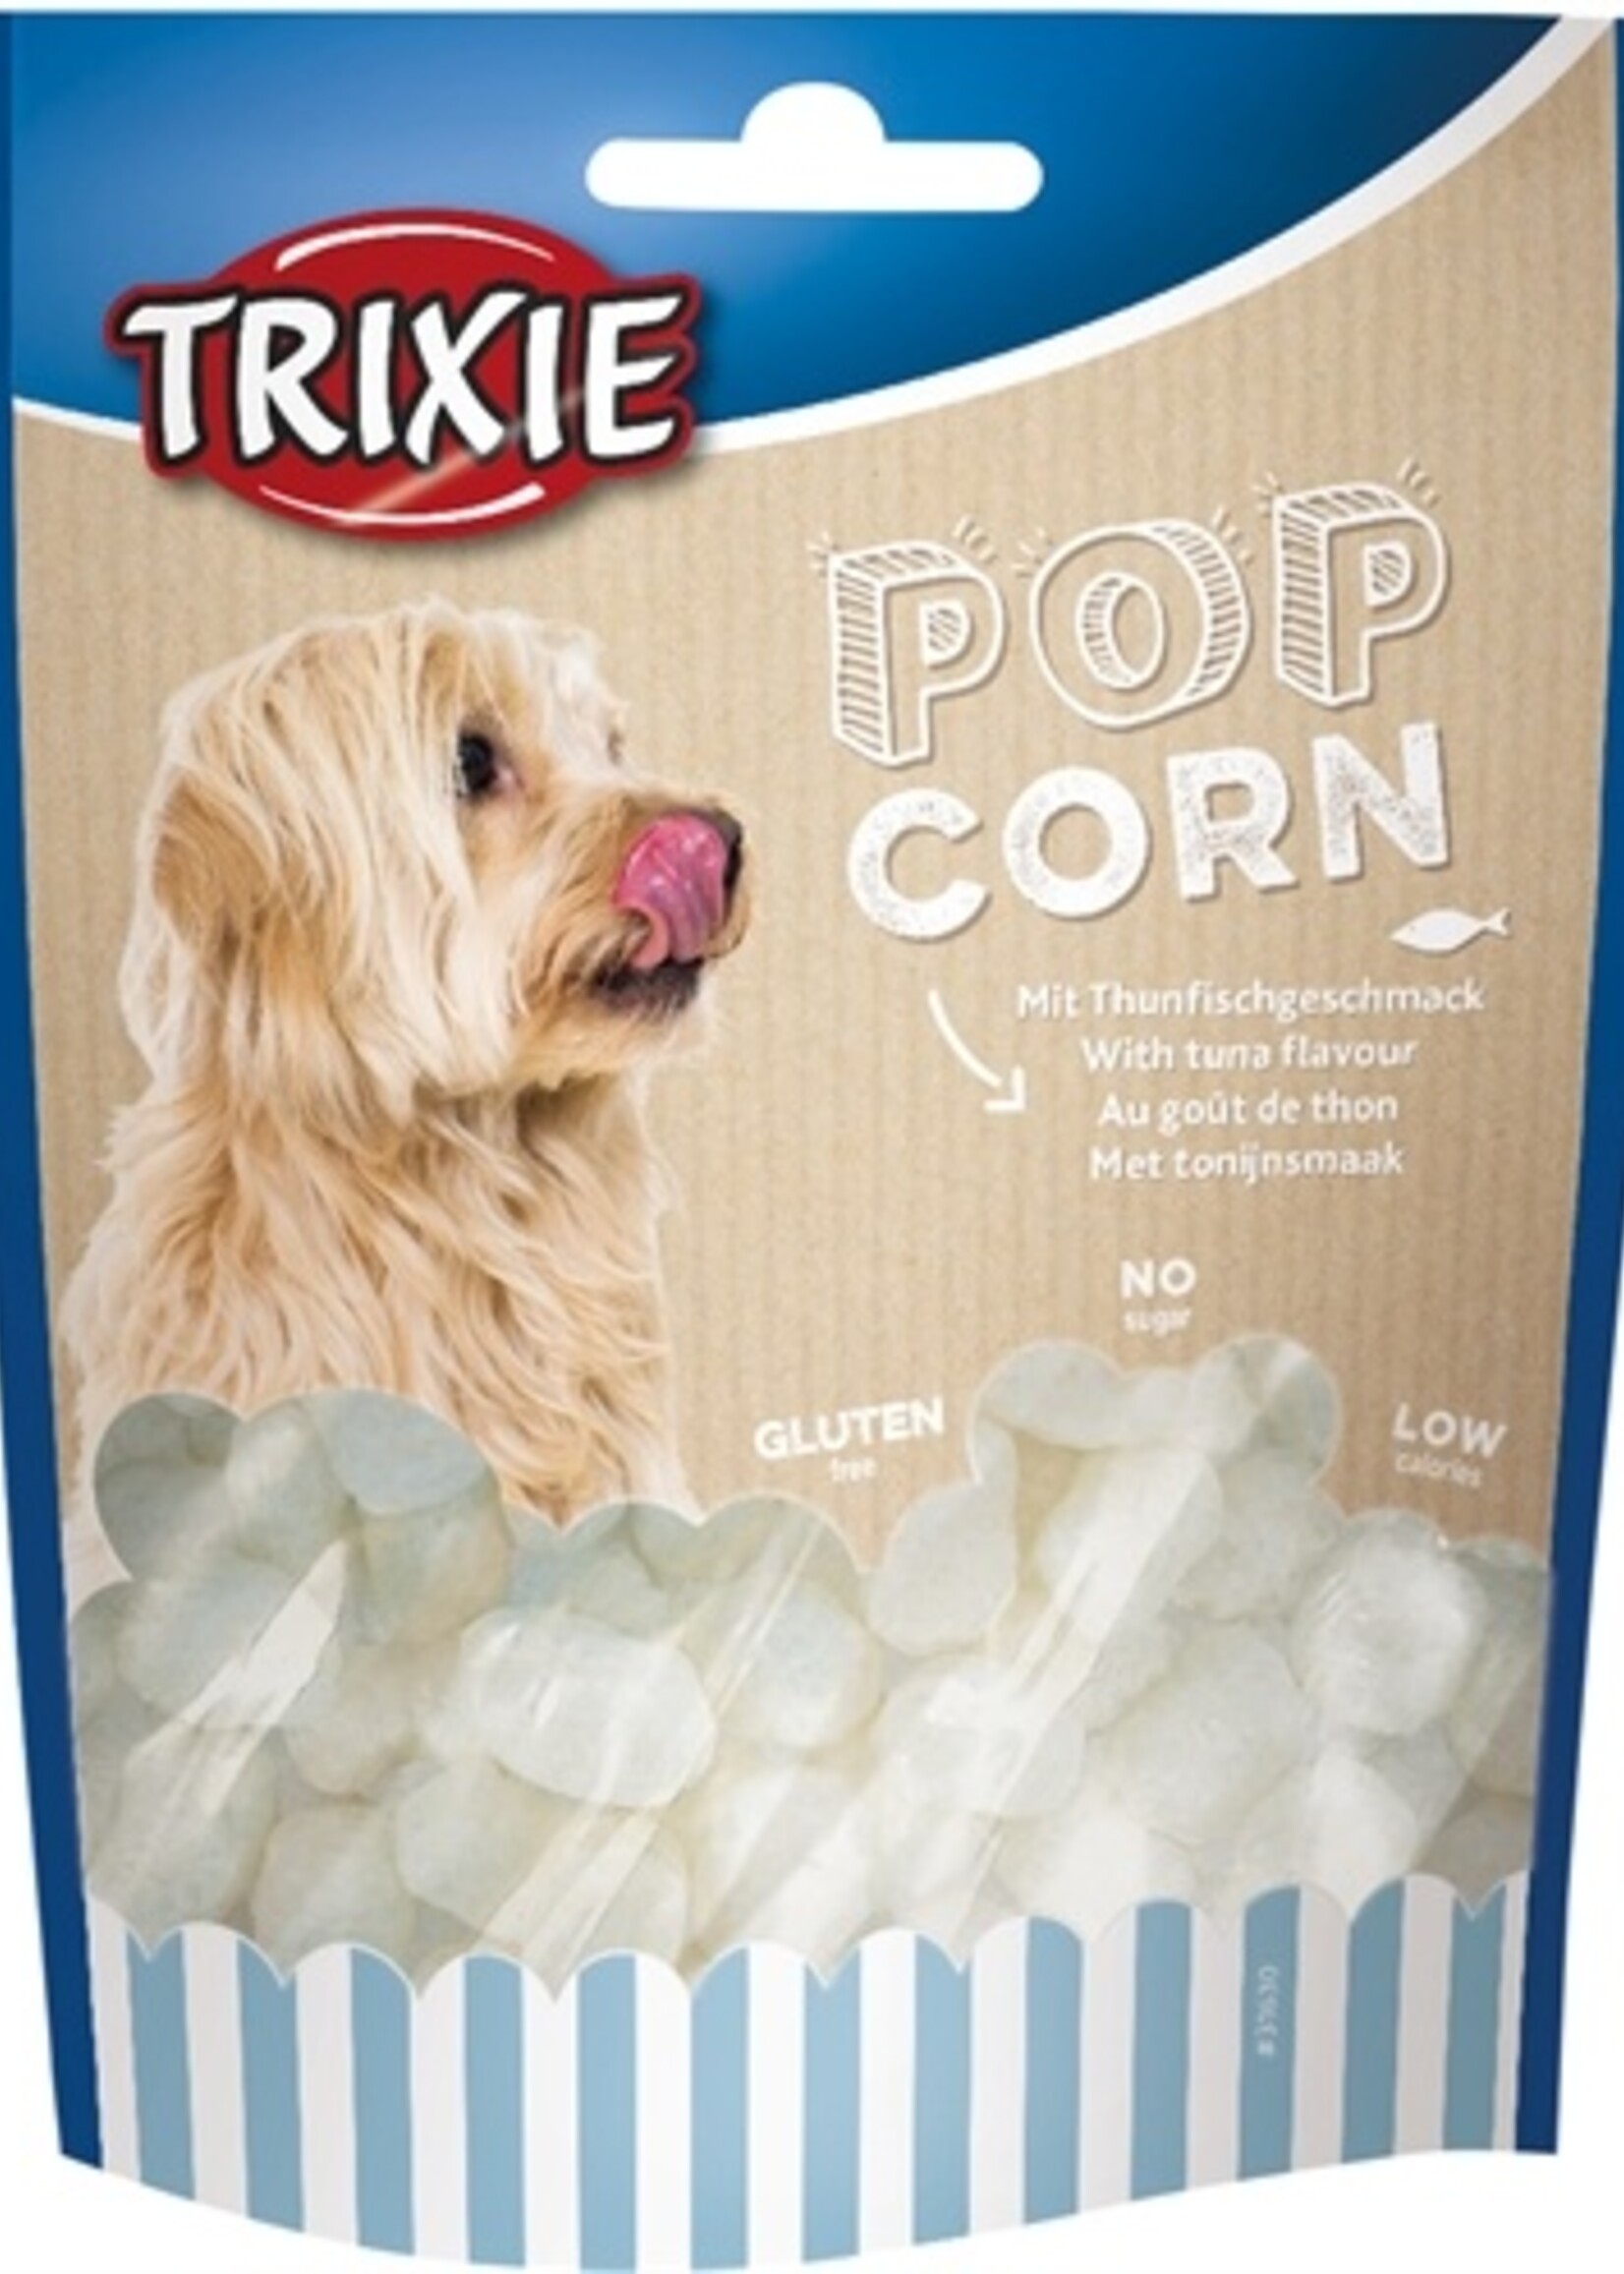 Trixie Trixie honden popcorn met tonijnsmaak lage calorieËn